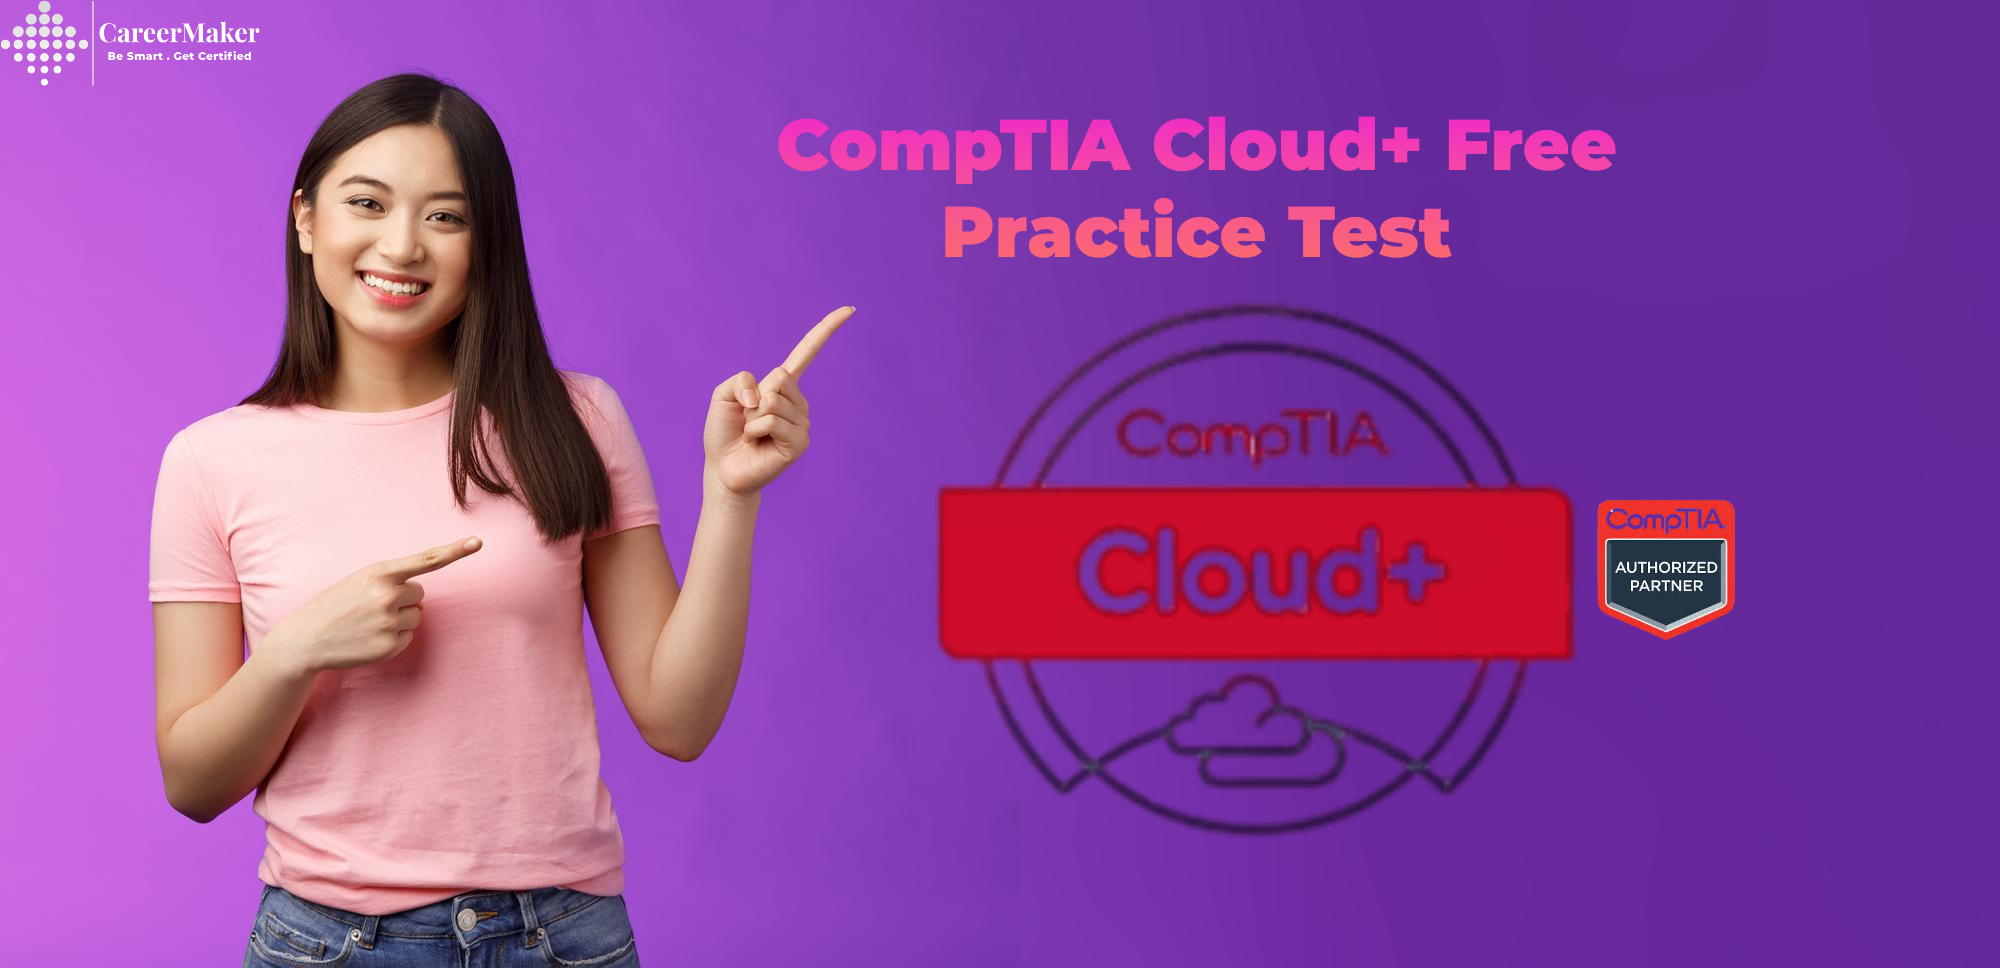 CompTIA Cloud+ Free Practice Test